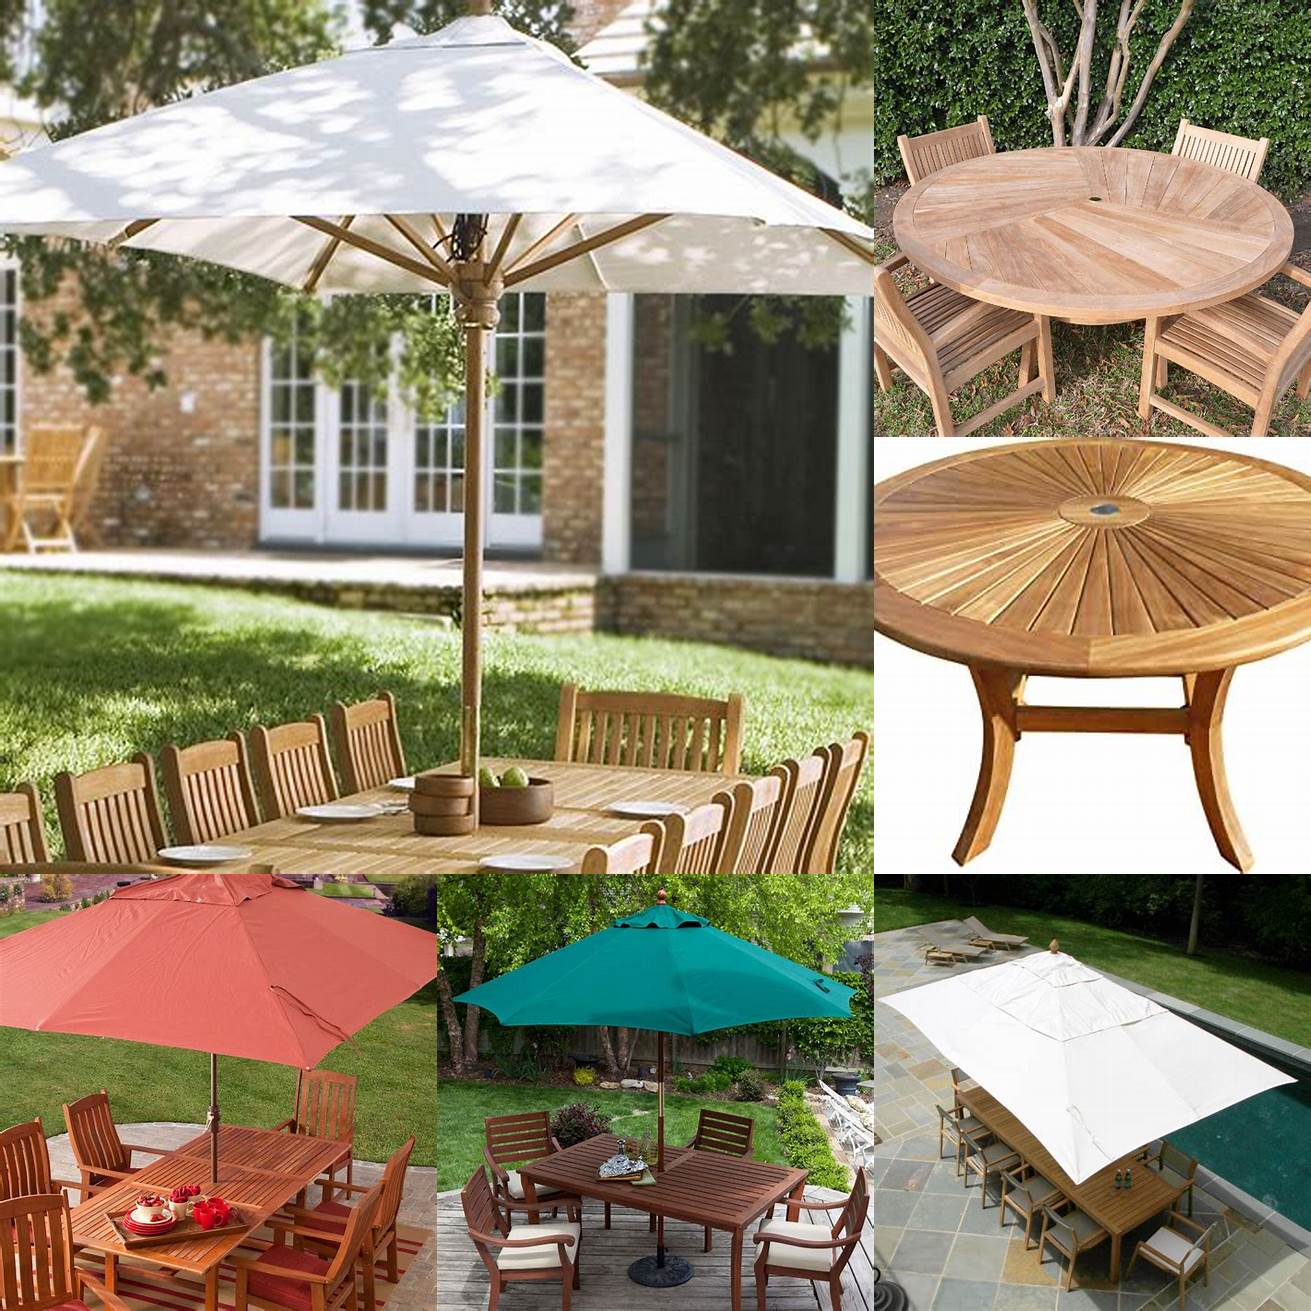 A teak outdoor table with an umbrella